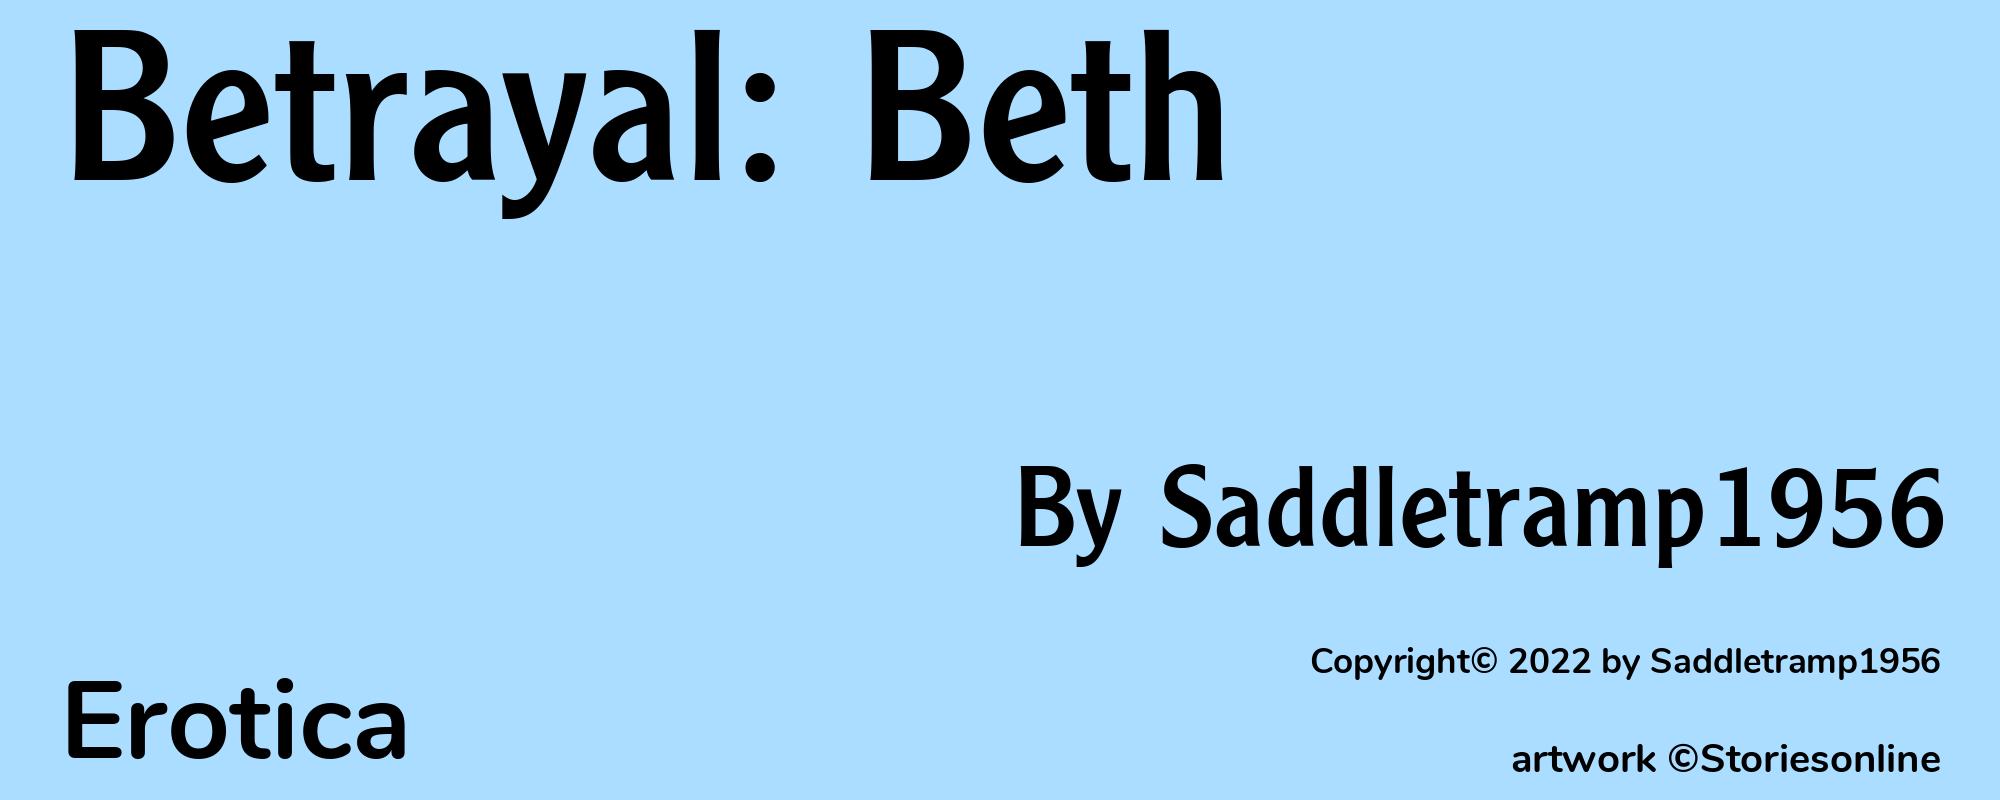 Betrayal: Beth - Cover